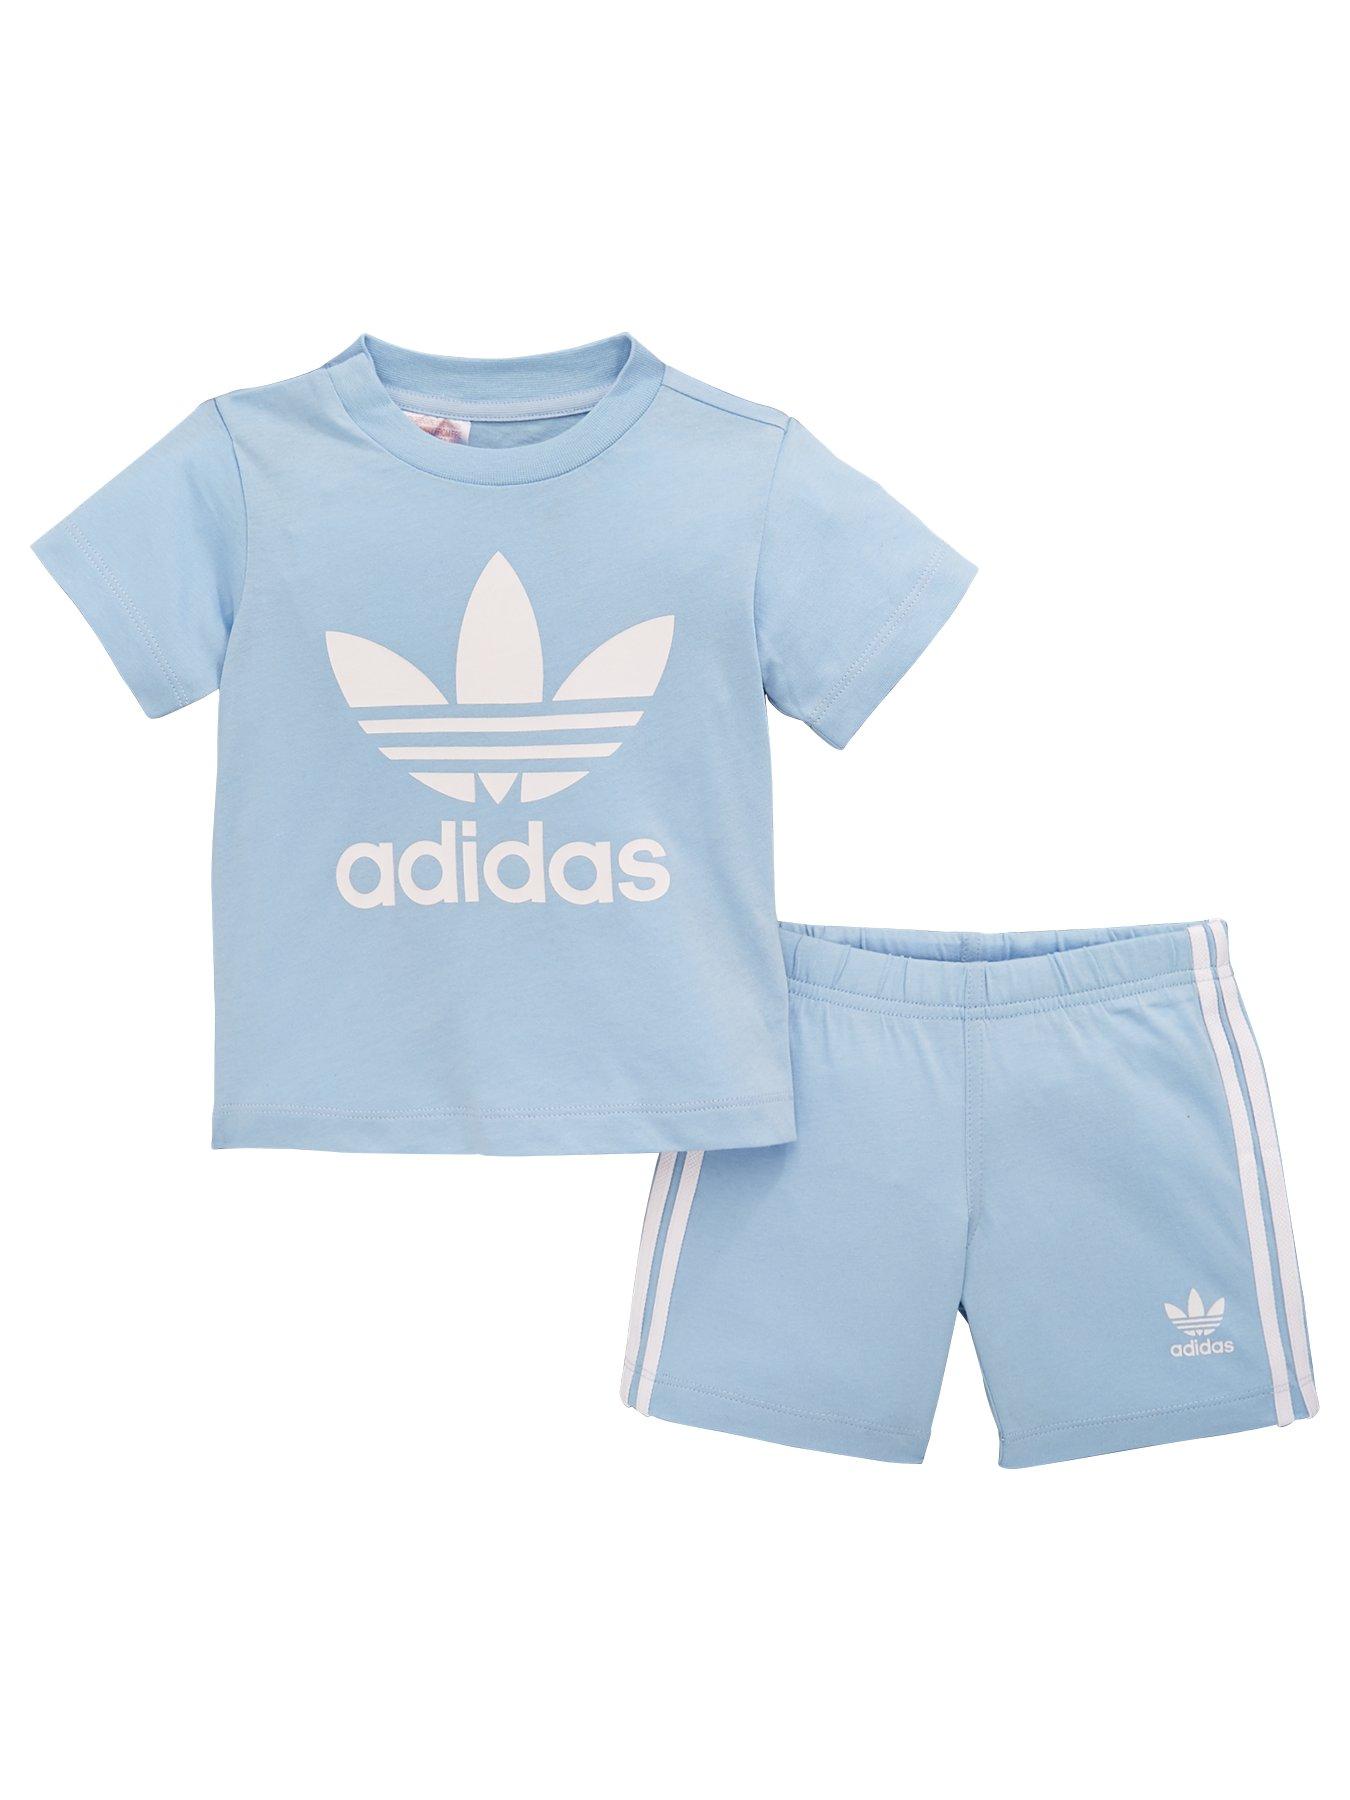 adidas Originals Baby Boys Infants 